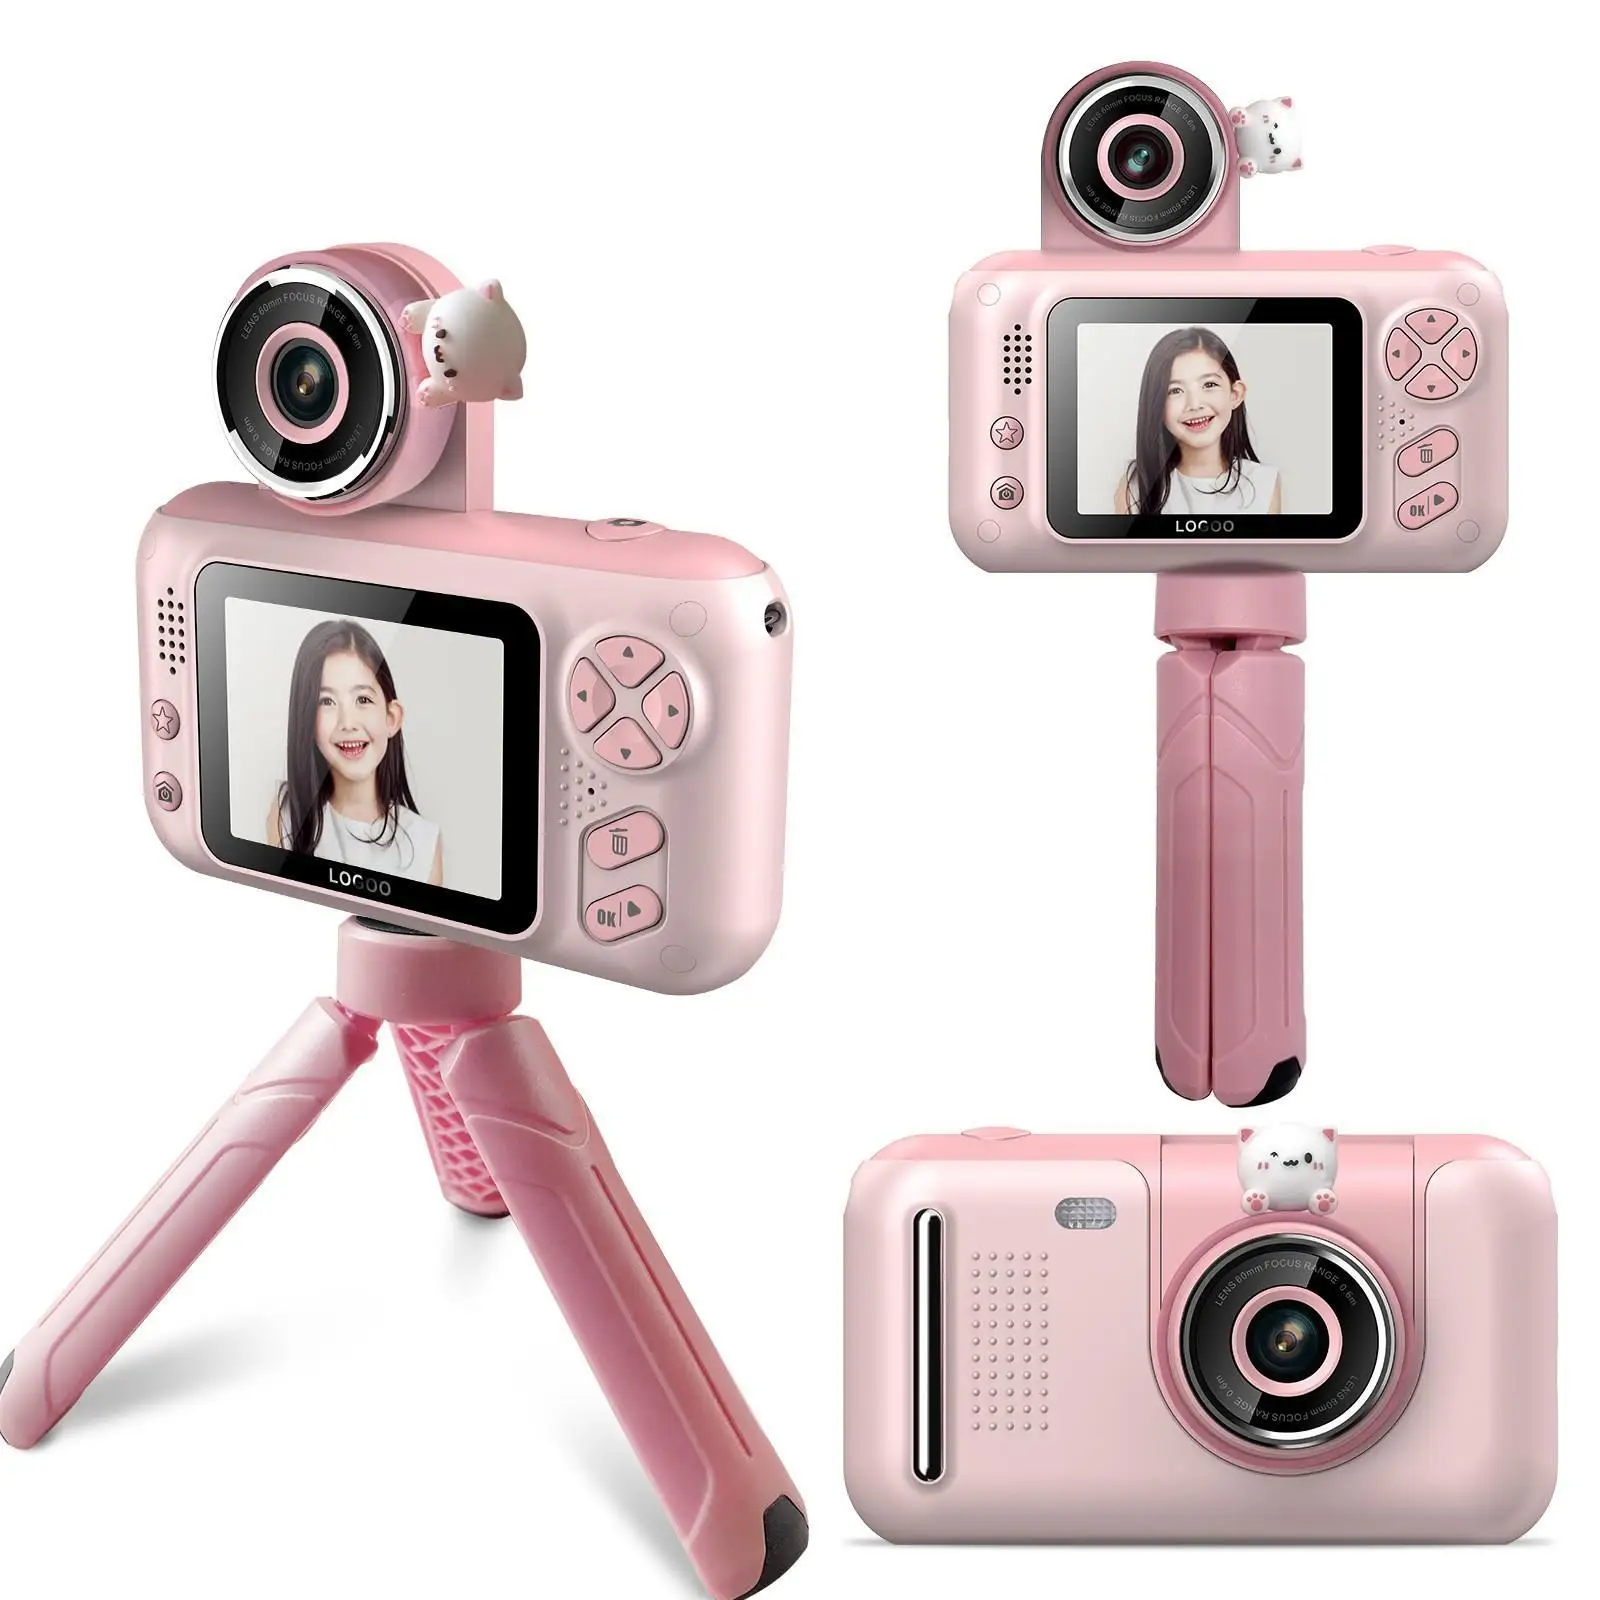  2 4 inch high definition mini children s digital camera for video recording 180 degree thumb200